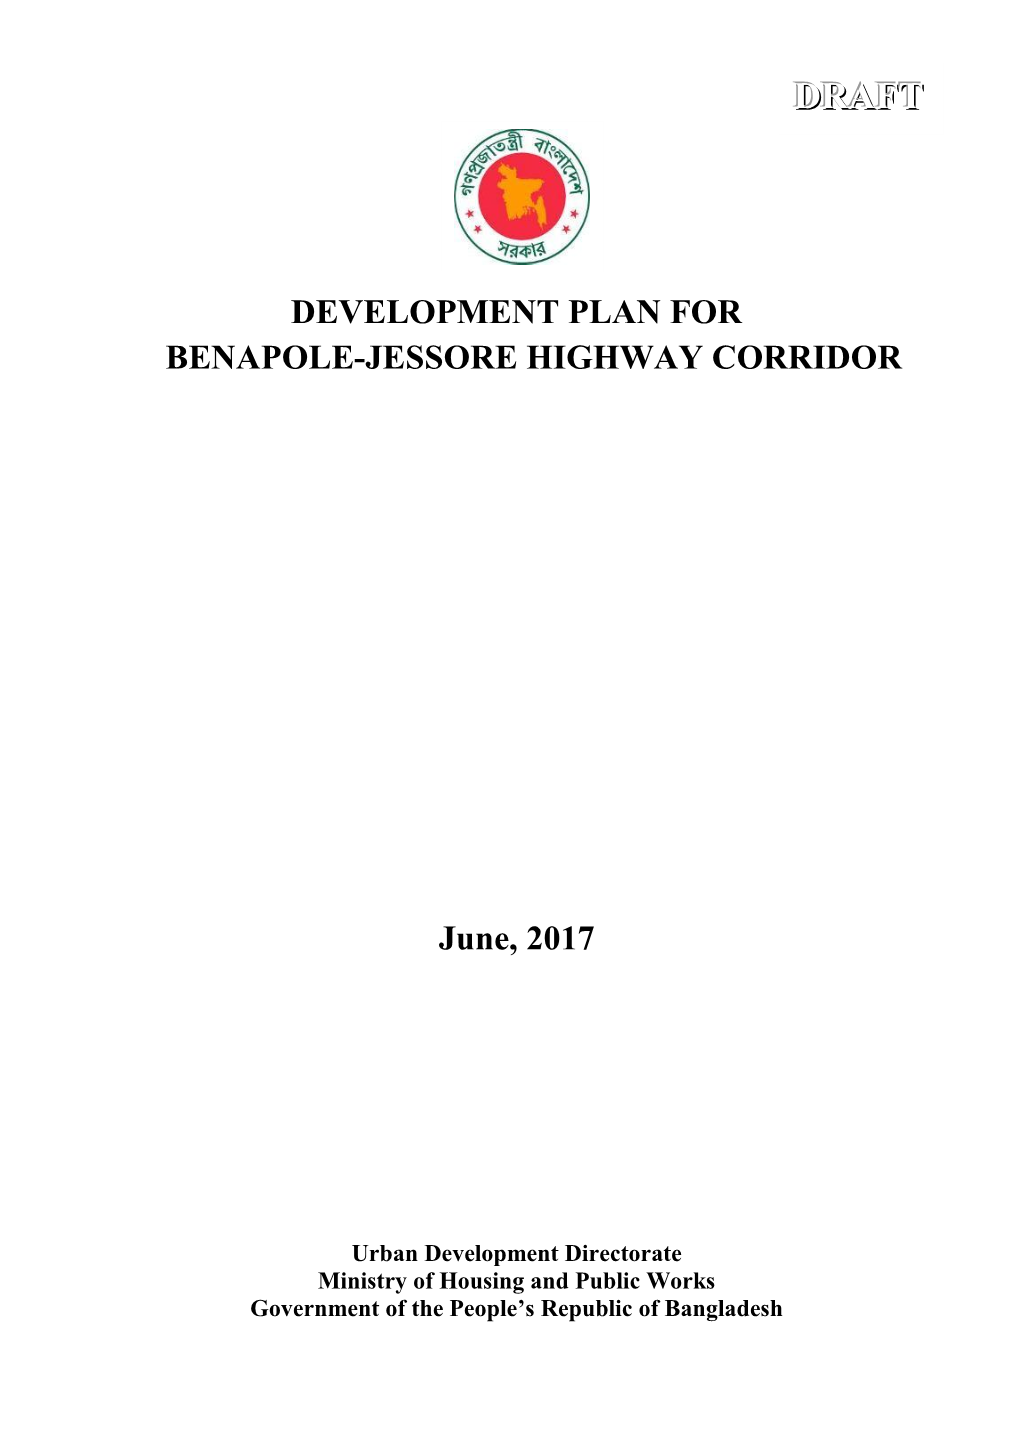 Development Plan for Benapole-Jessore Highway Corridor